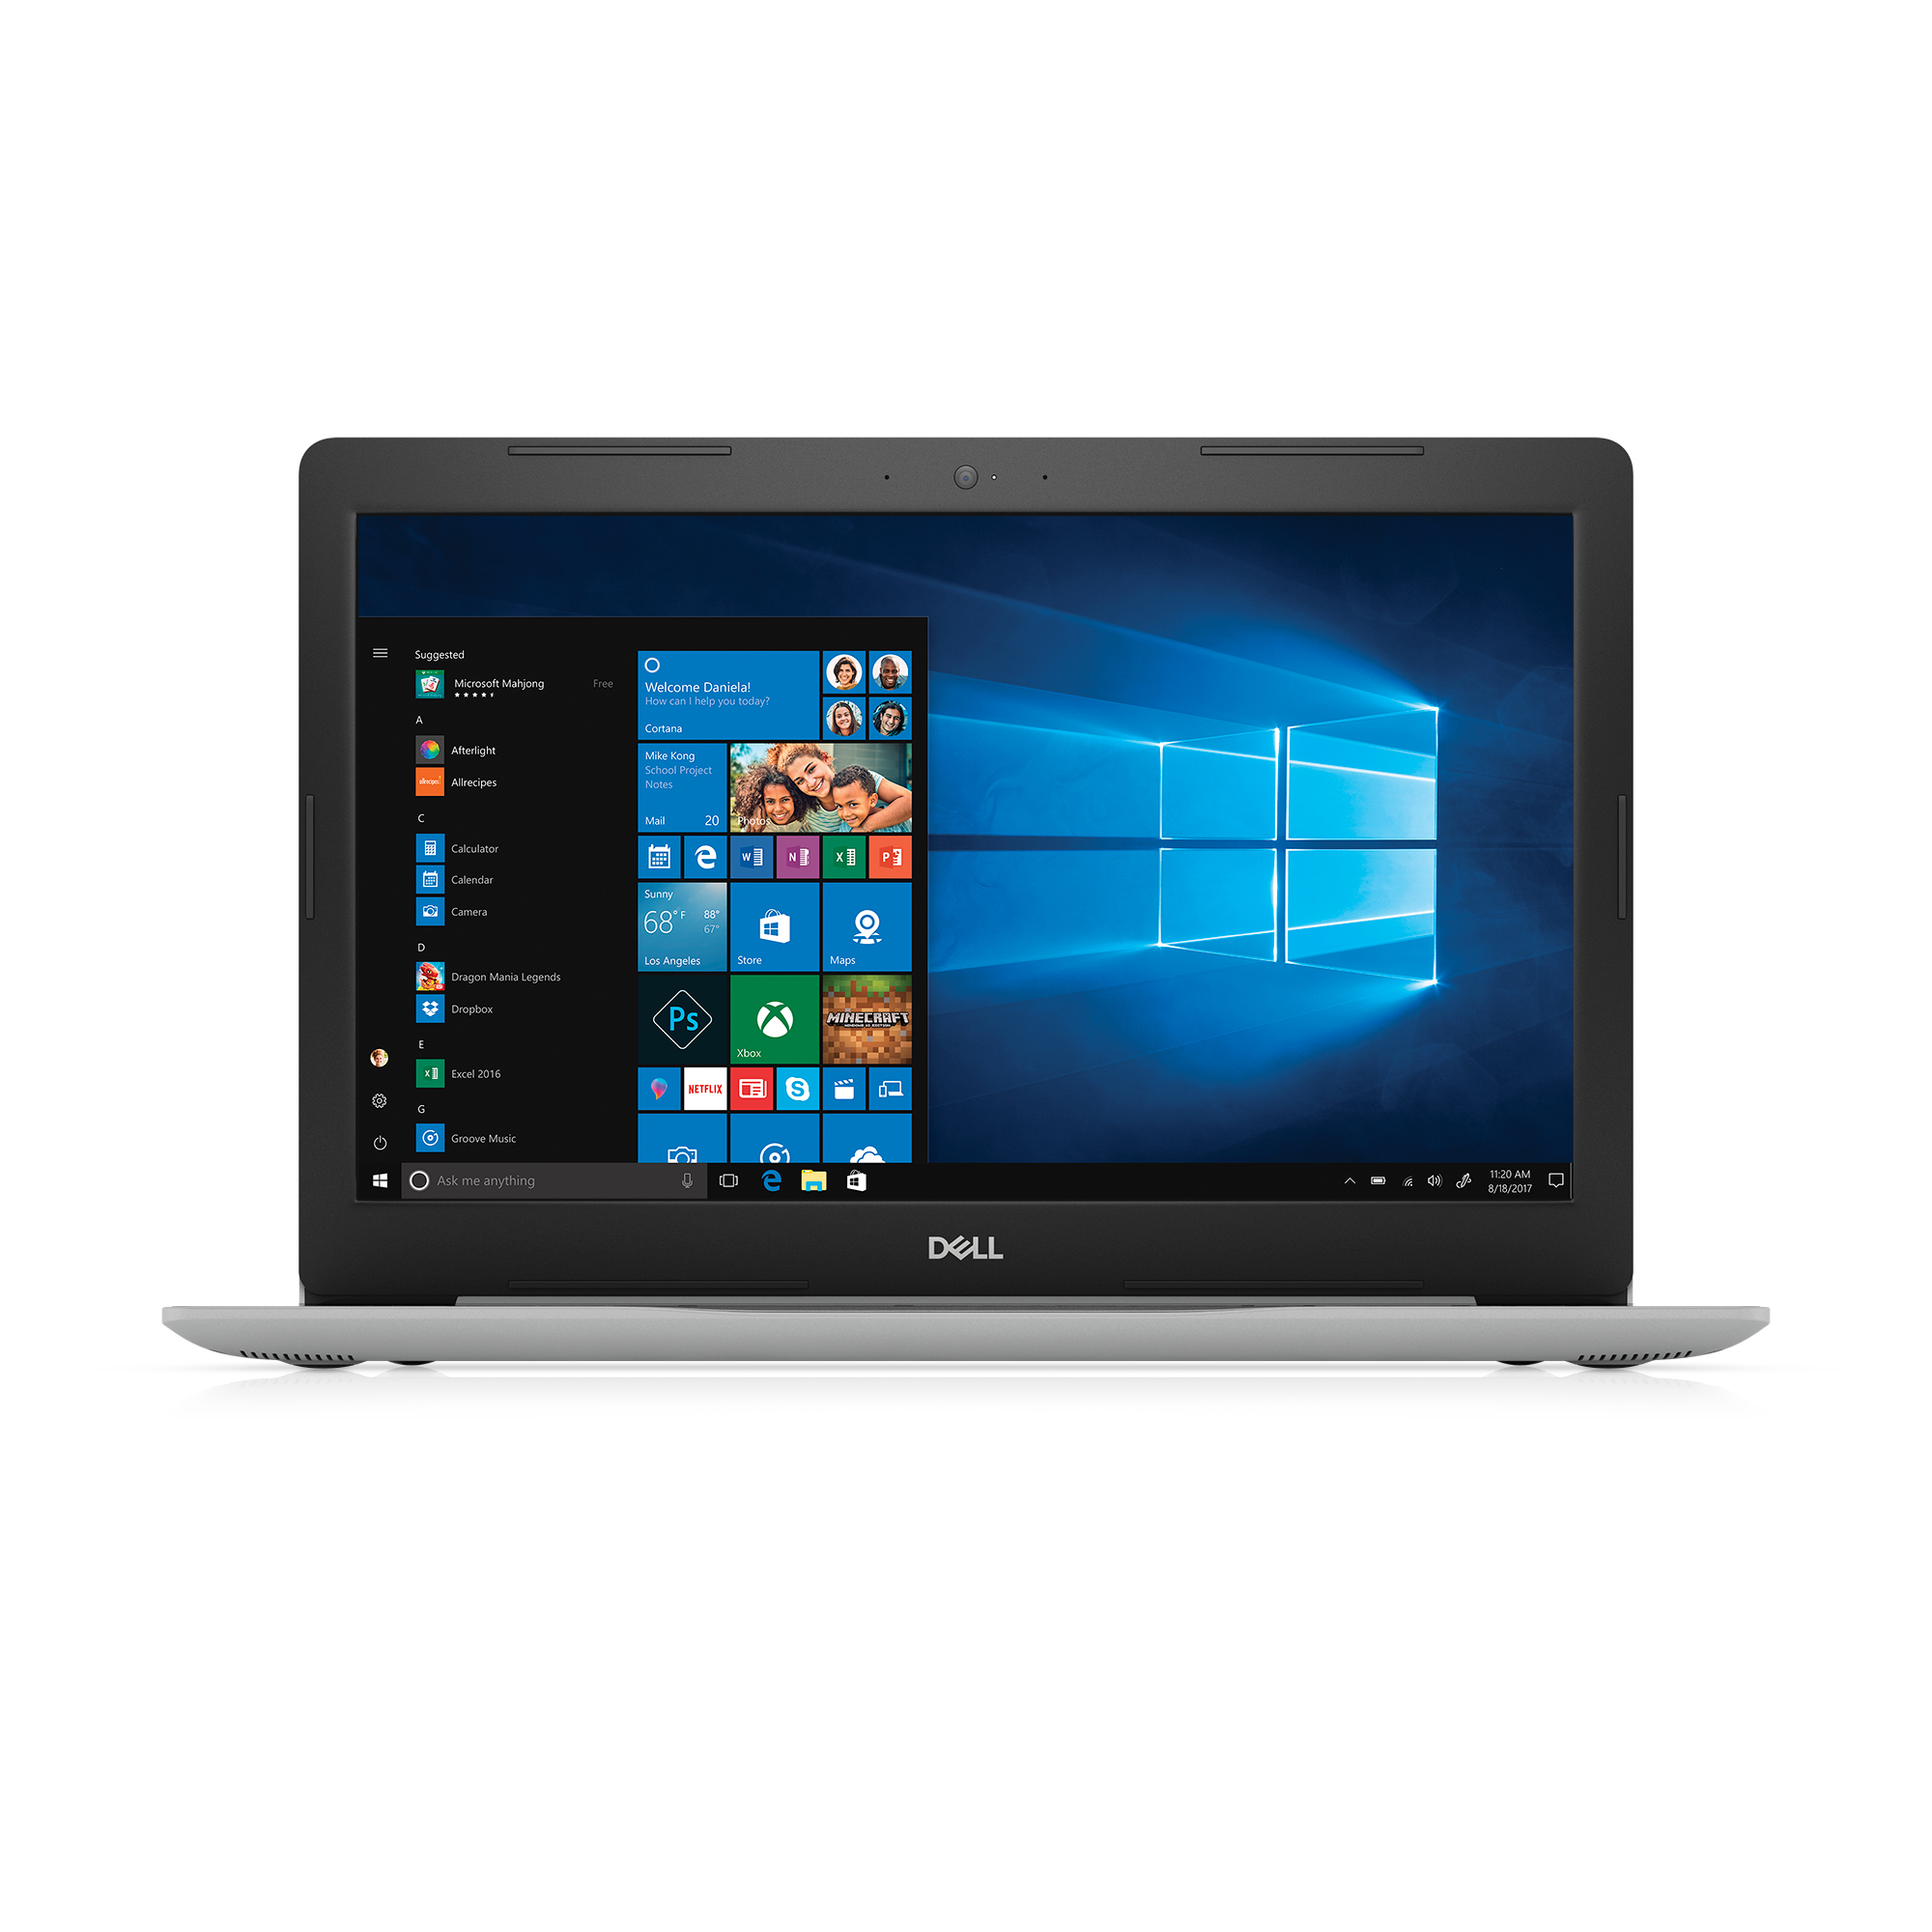 Dell i5575-A347SLV Inspiron Laptop, 15.6'' Touchscreen, AMD Ryzen 5 2500U, 16GB DDR DRAM, 1TB HDD, Windows 10 Home 64bit - image 4 of 8